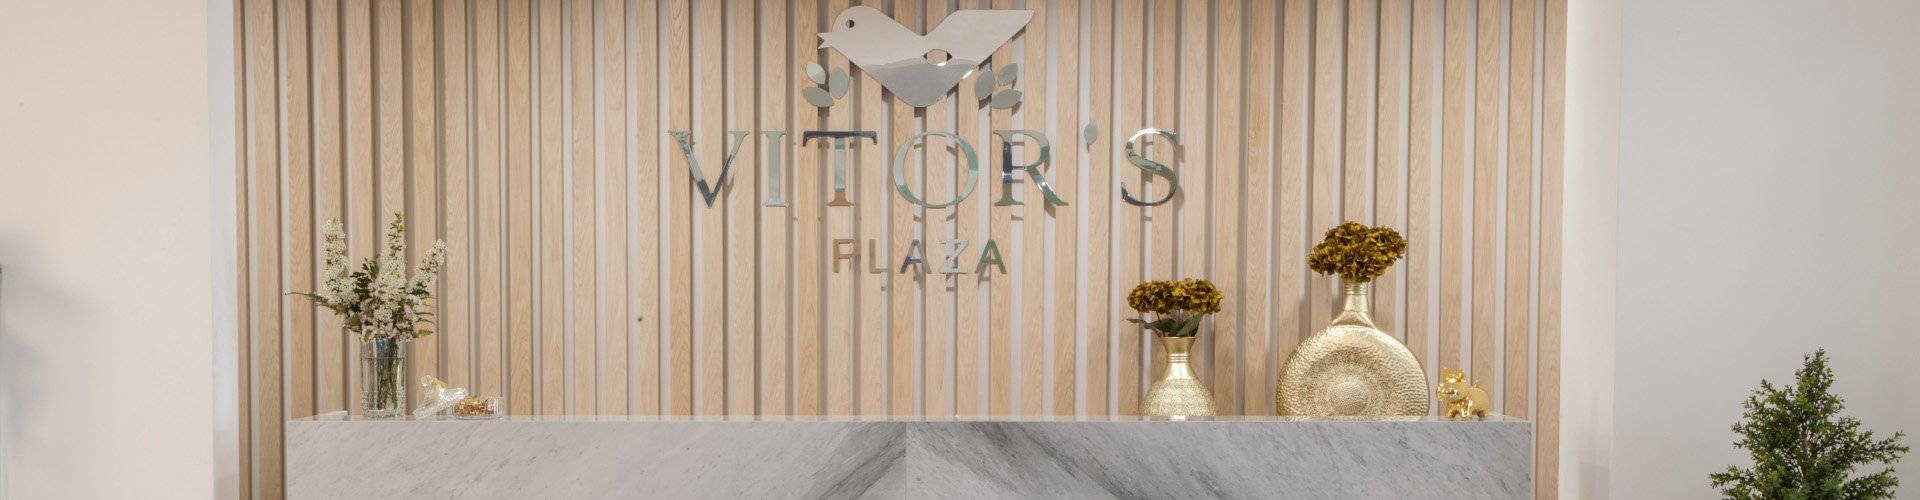 Vitors hotels - Alvor - 